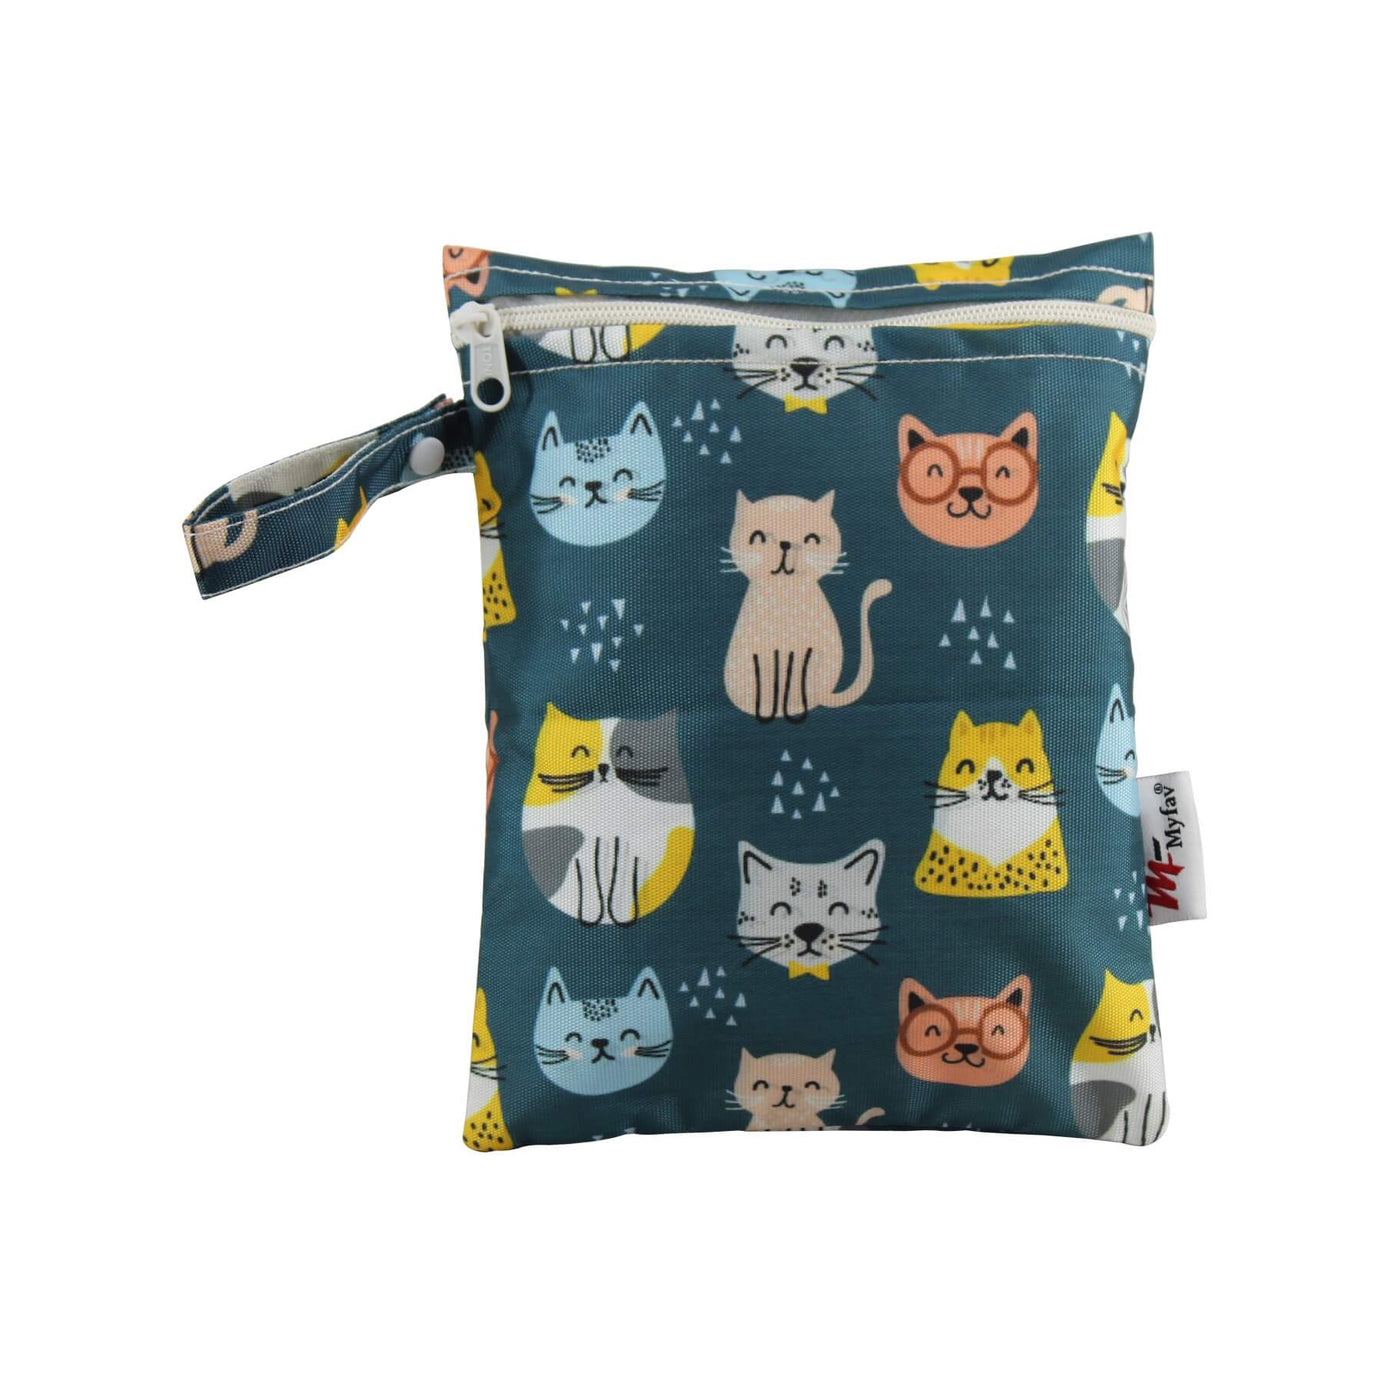 My Fav Cat Print Multiutility Wet Dry Pouch/Diaper Bag/Travel Pouch/Travel Kit